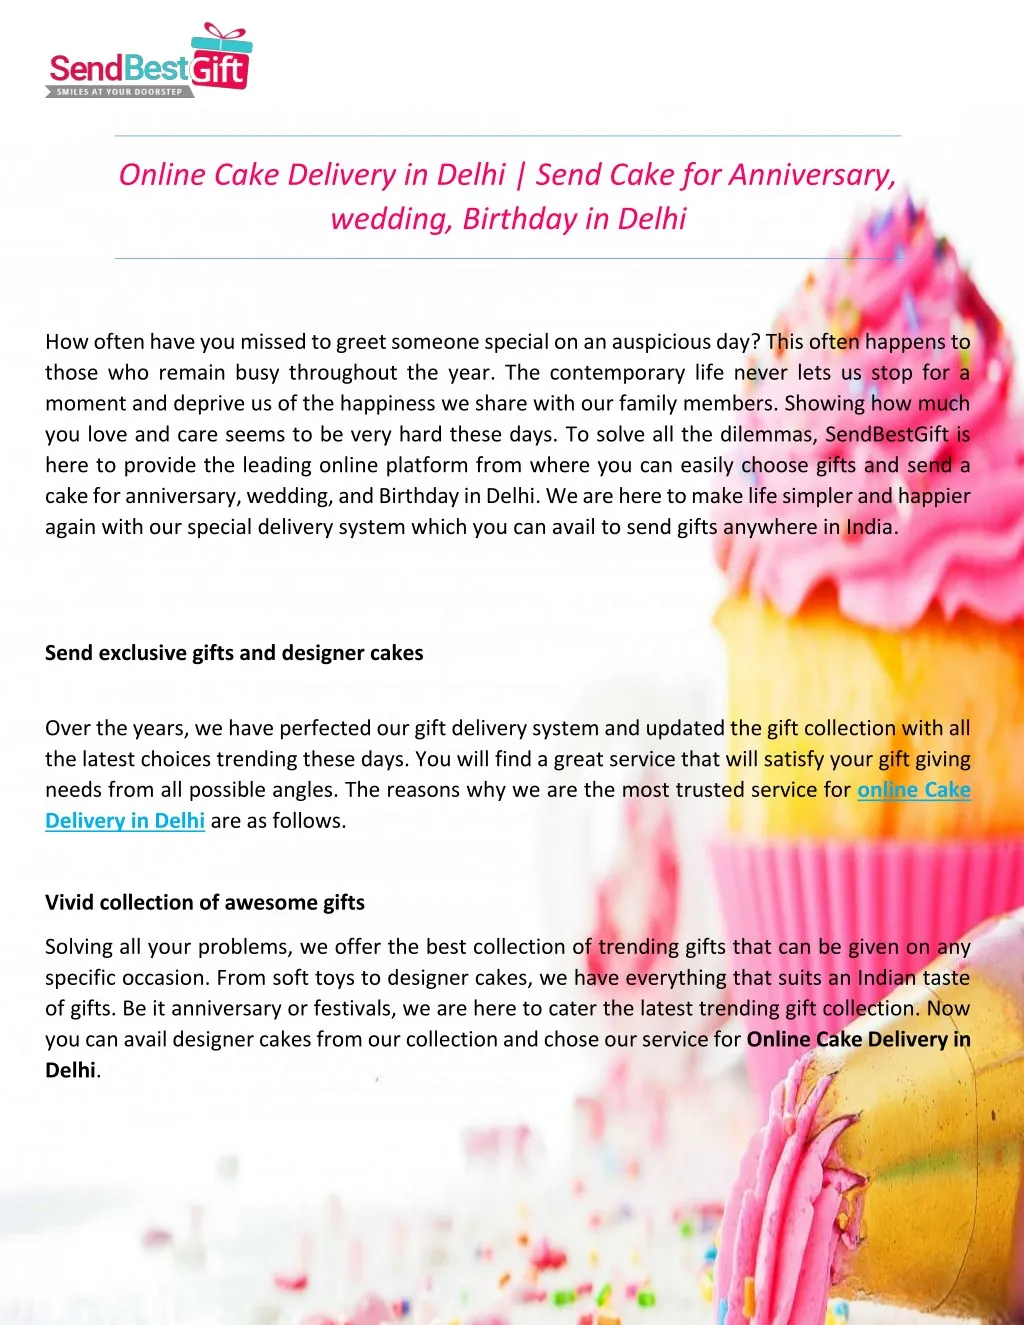 online cake delivery in delhi send cake